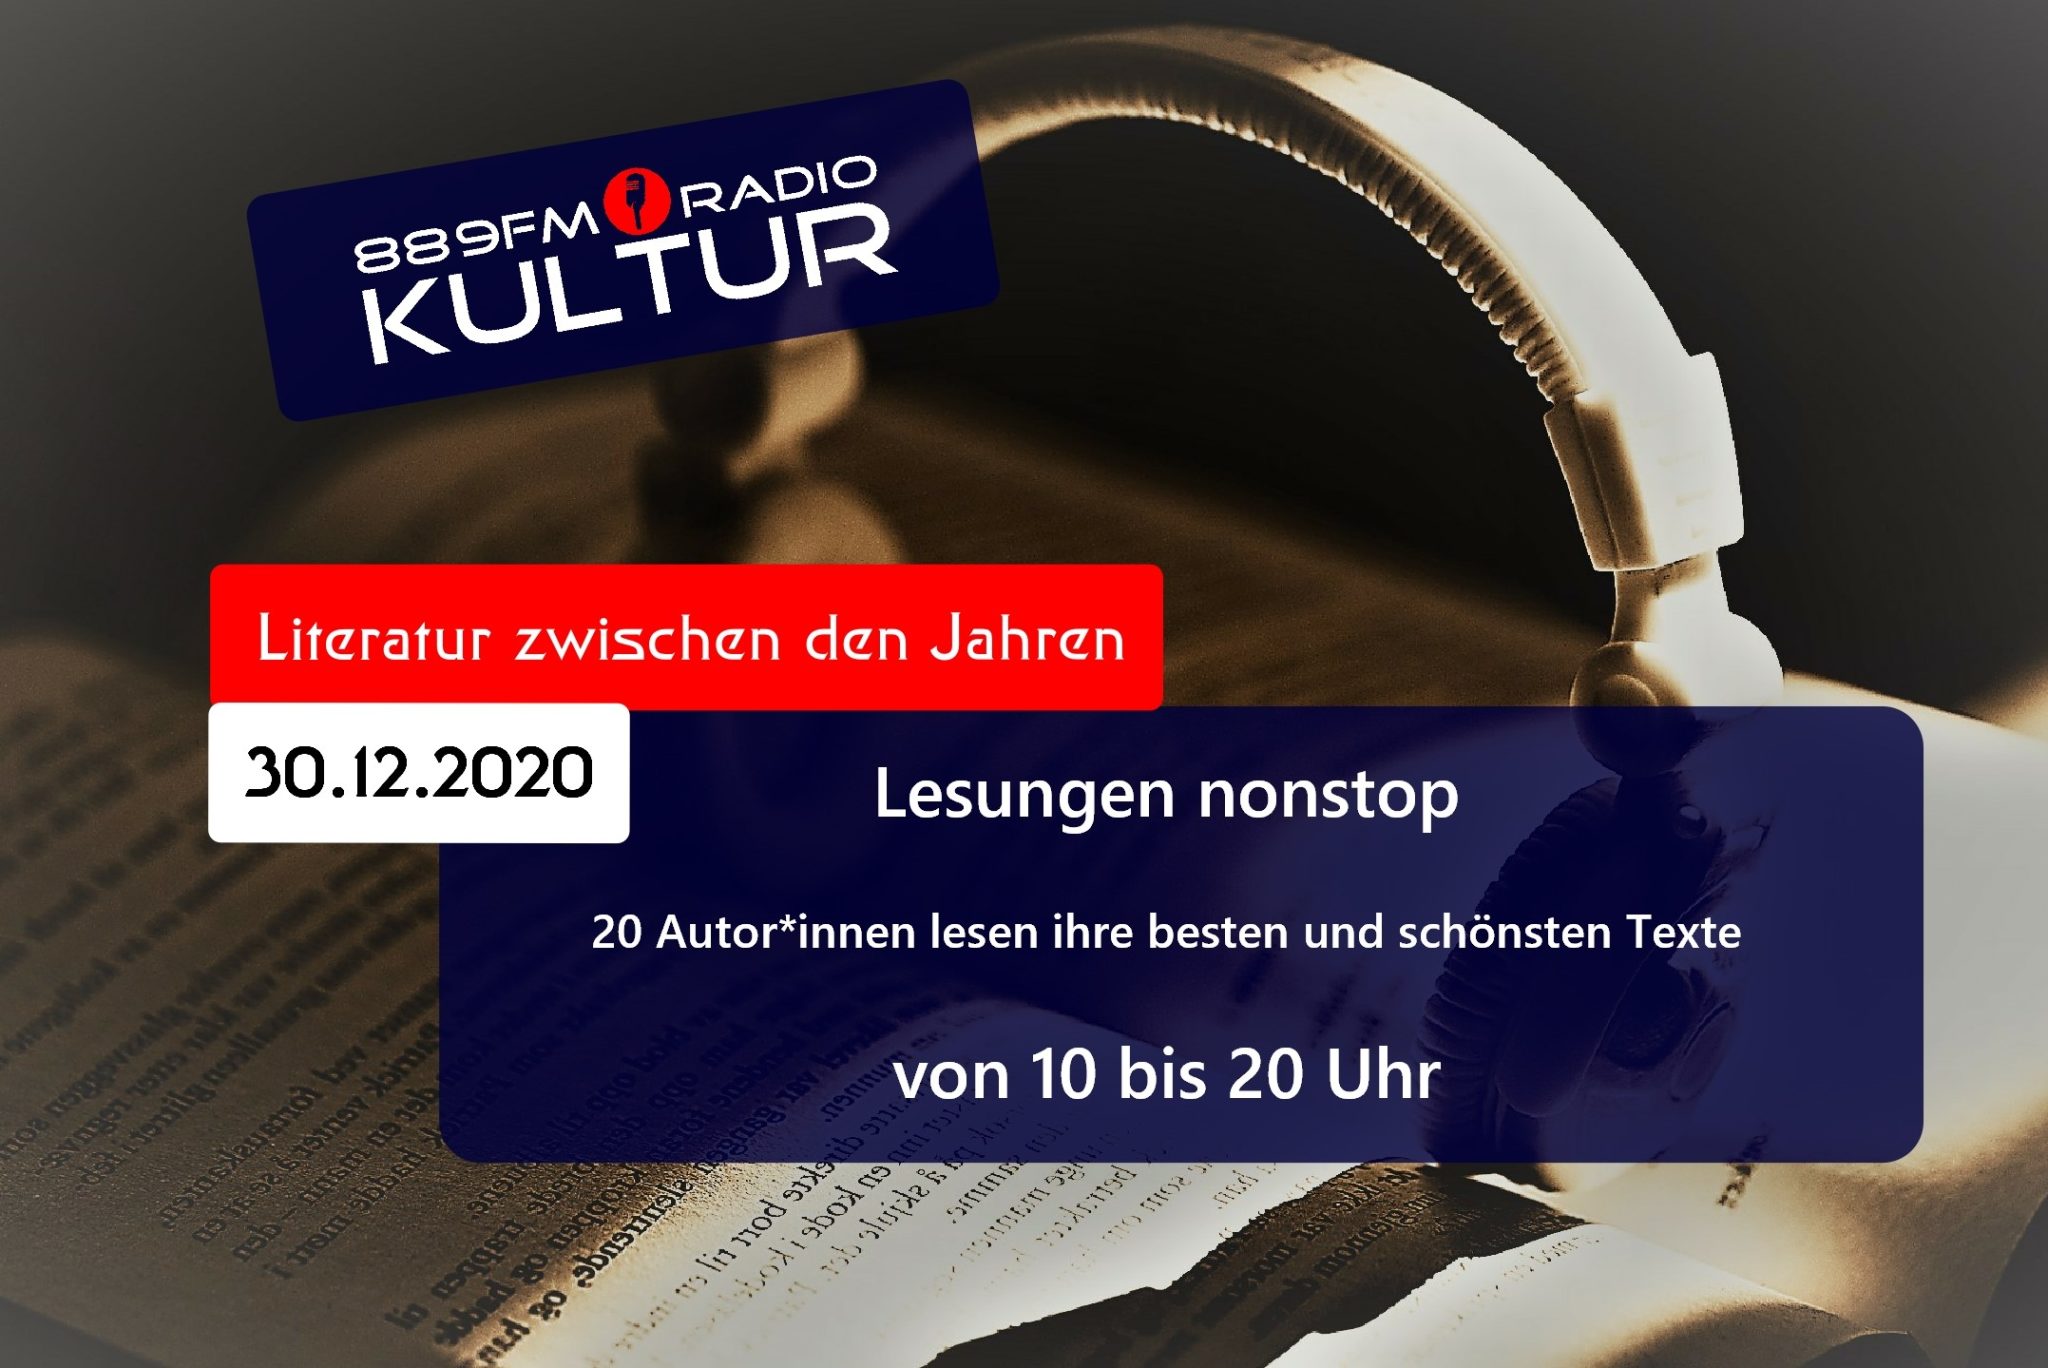 Radio 889FM Kultur, 889FM Kultur, 889FM